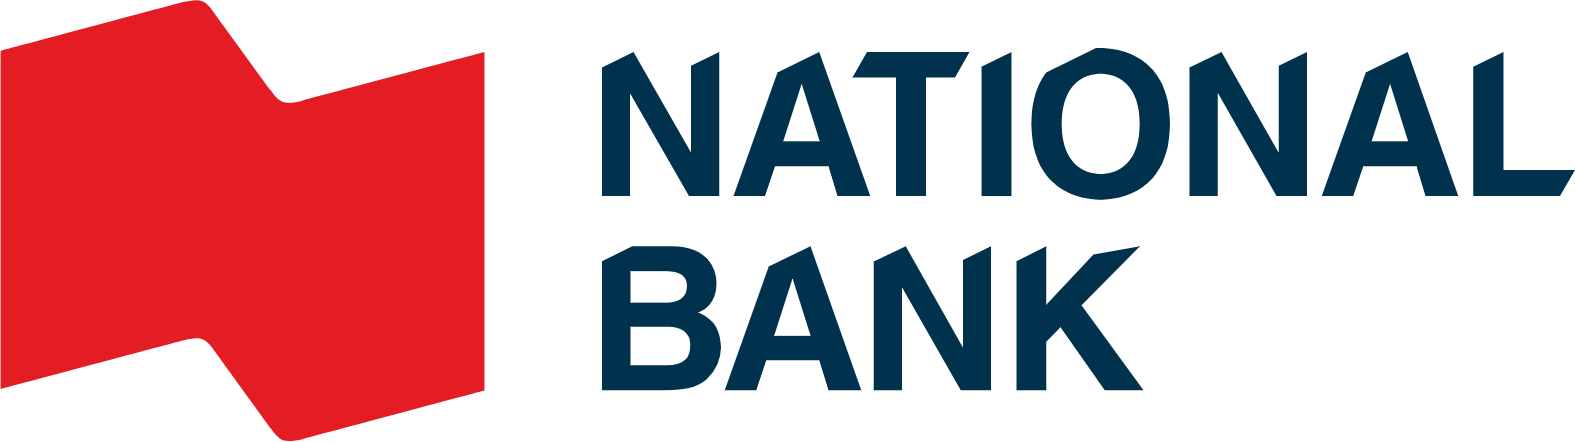 National Bank of Canada
 logo large (transparent PNG)